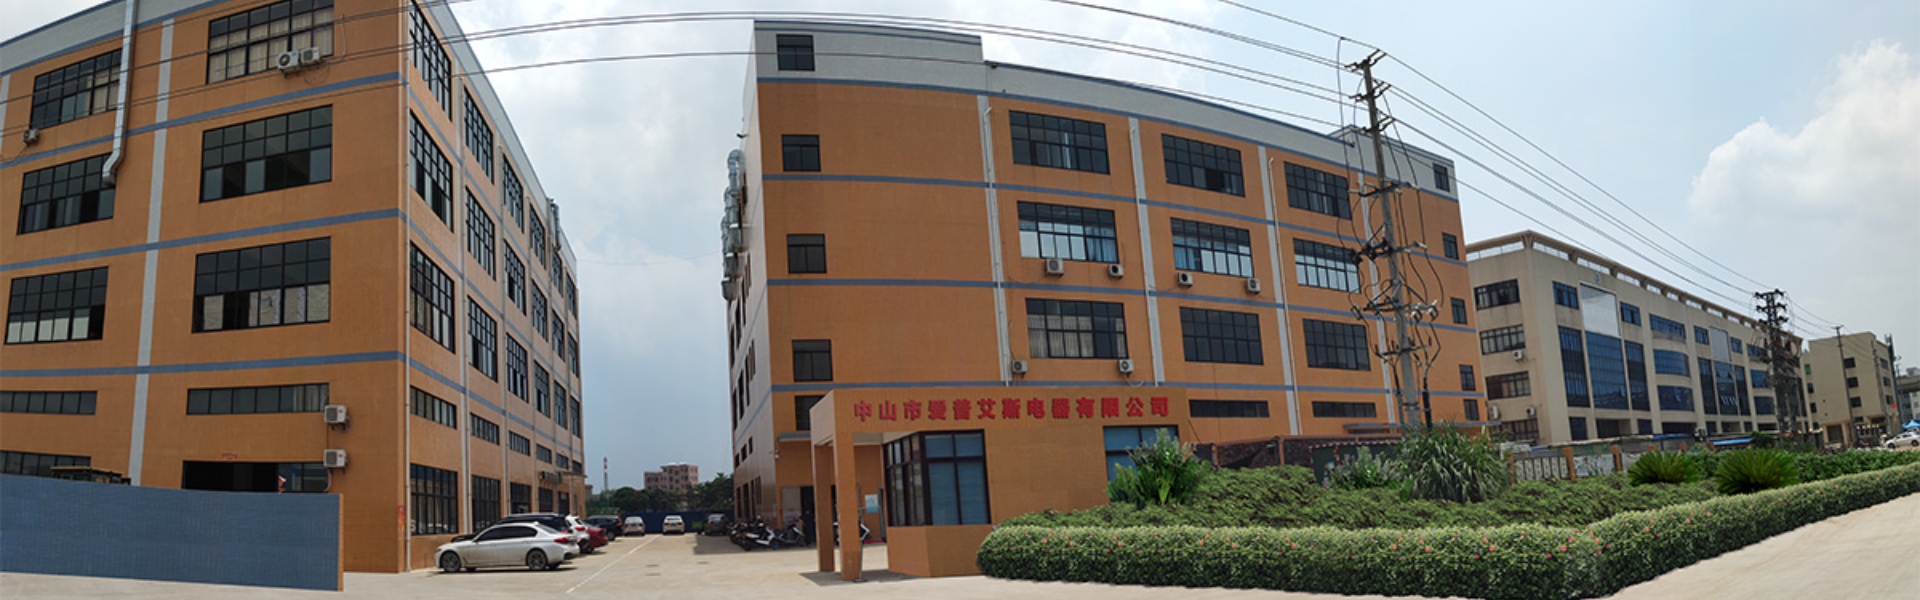 Кондензаторно ядро, метализирано фолио, cbb61,Zhongshan Epers Electrical Appliances Co.,Ltd.